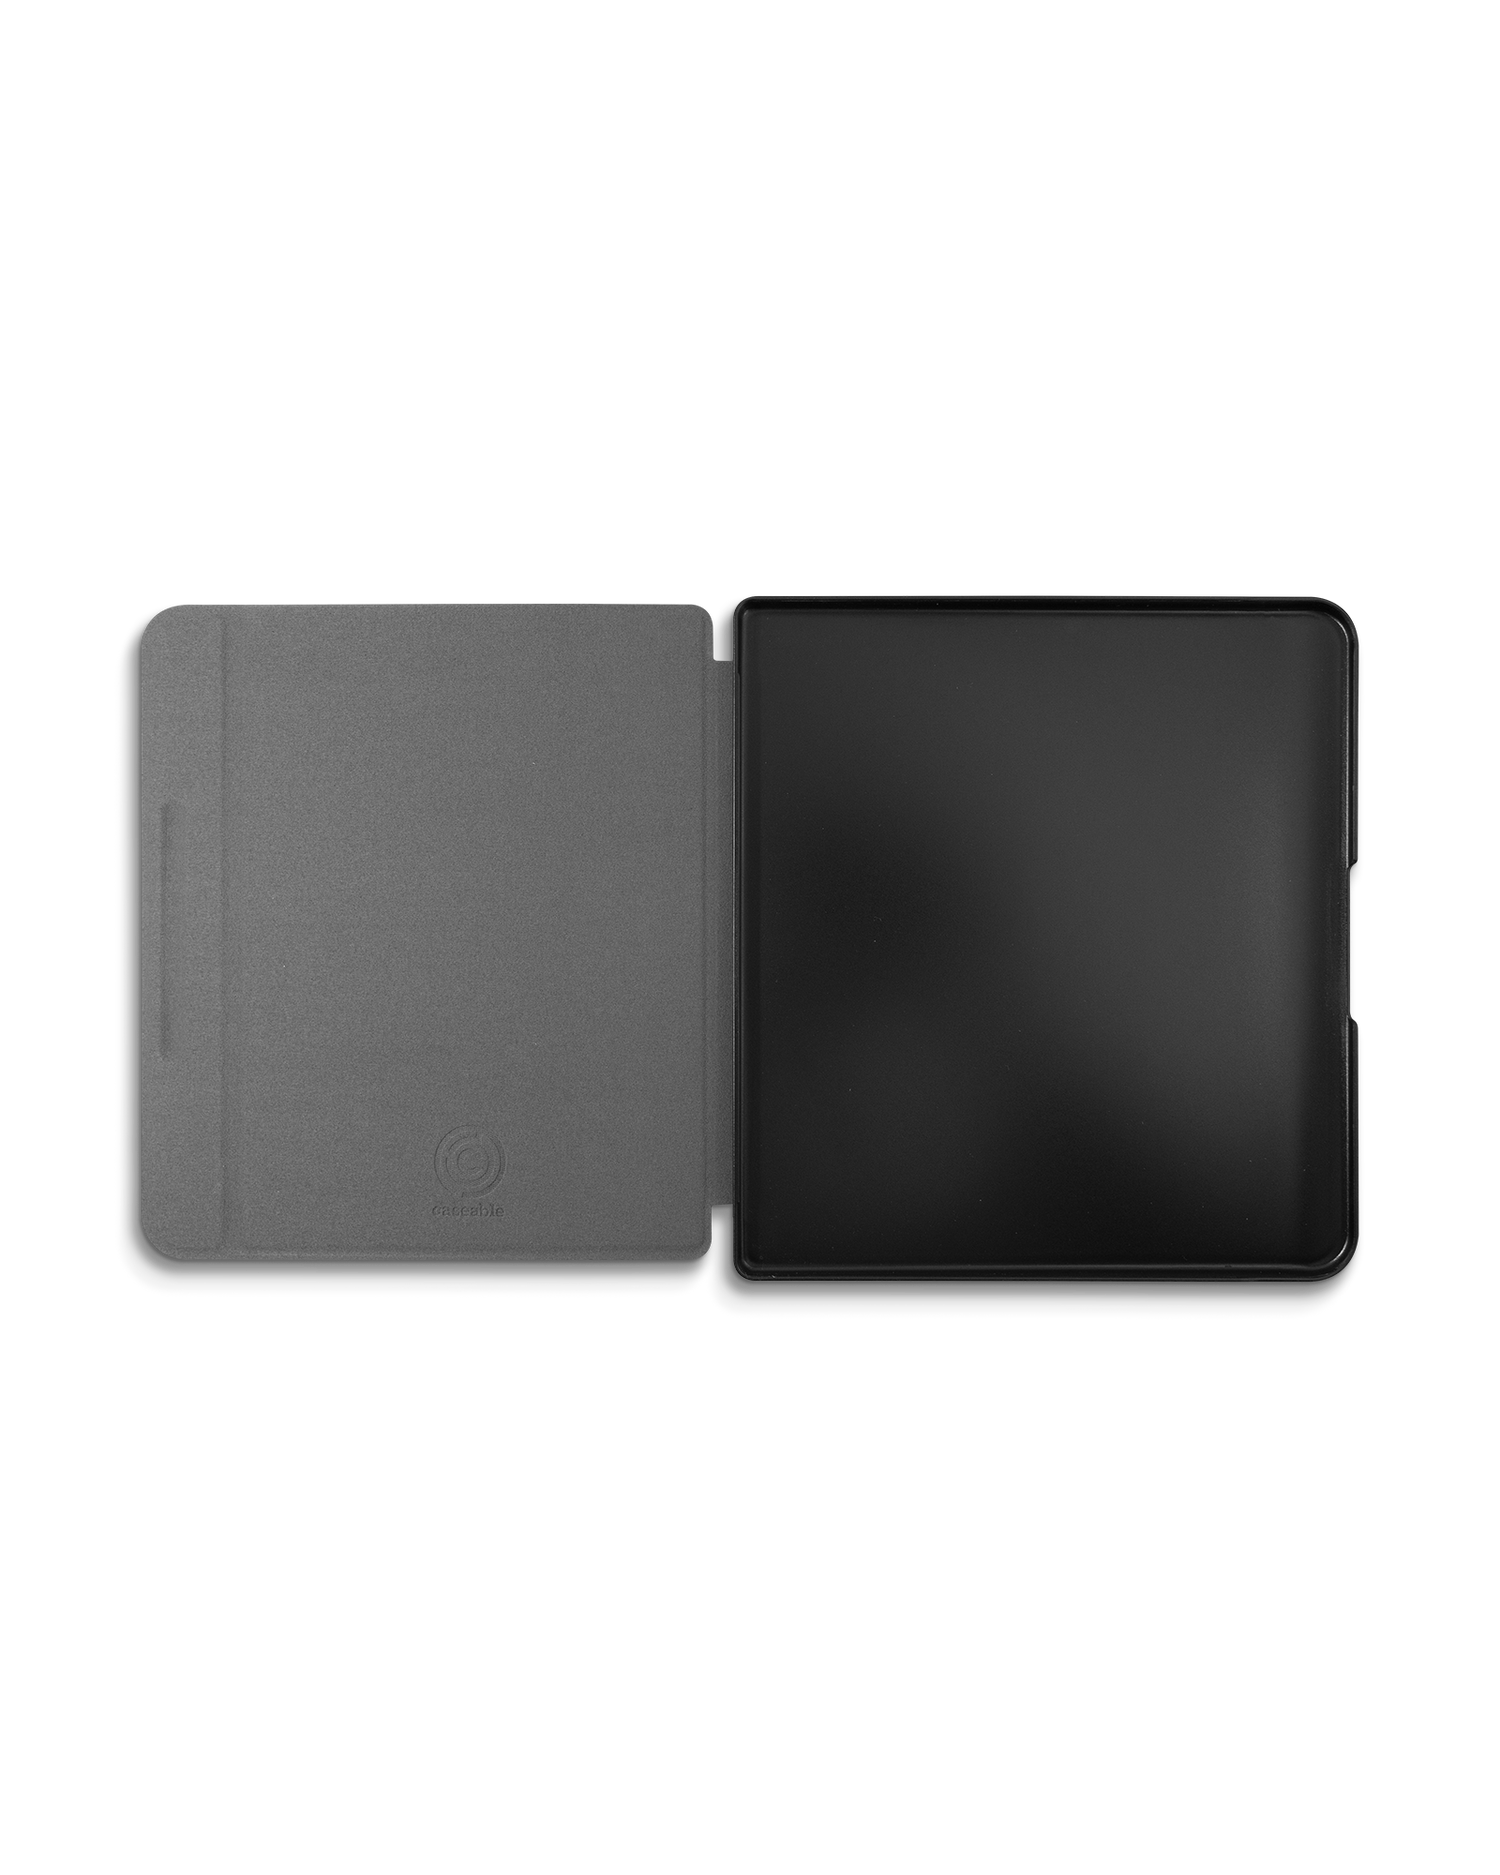 BLACK eReader Smart Case for tolino epos 2: Opened interior view